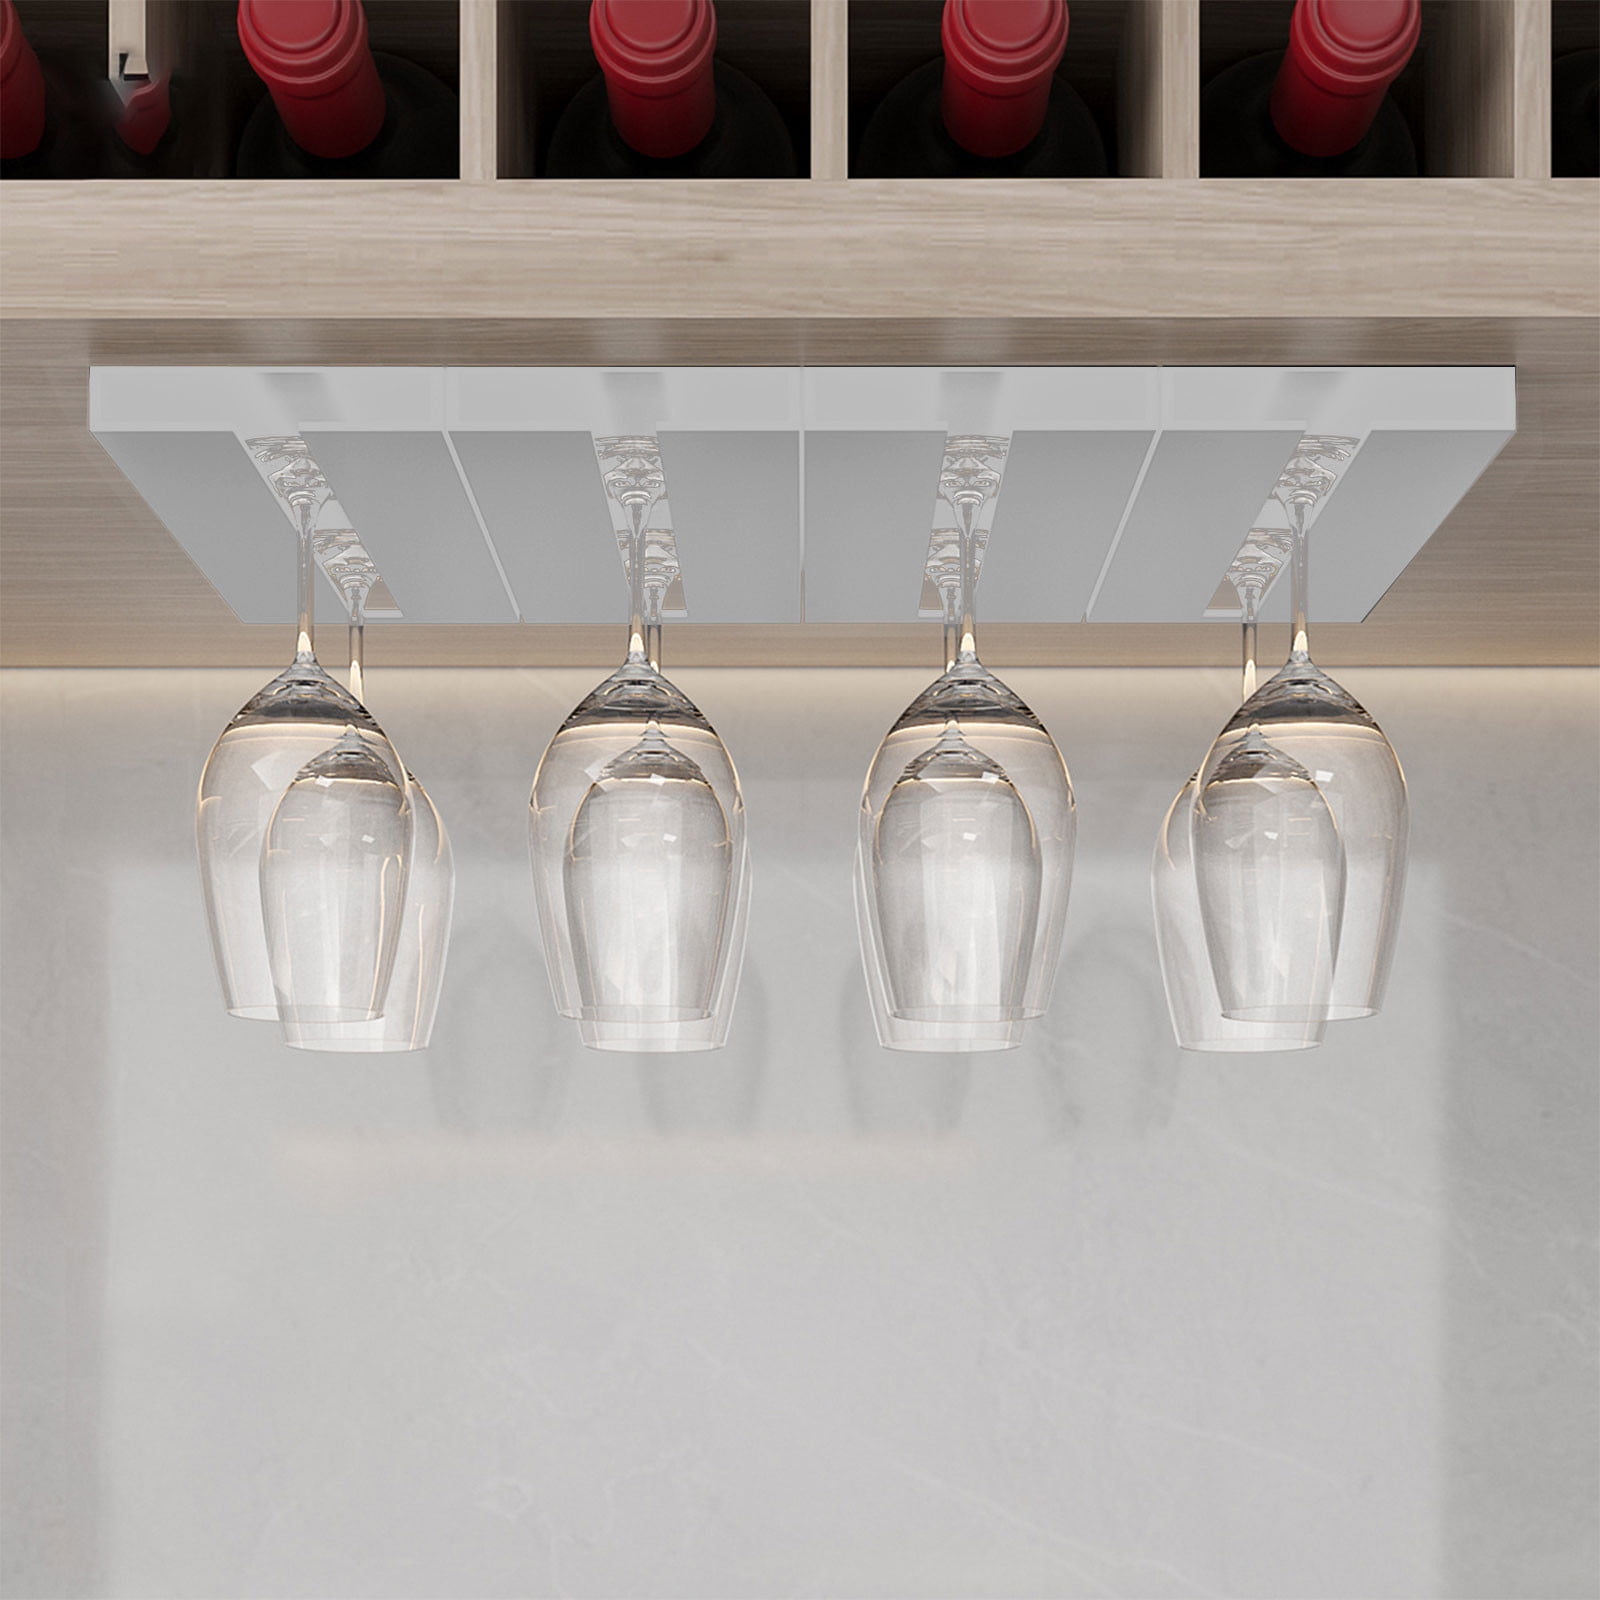  BTHLYES 2 Pack Wine Glass Rack - Punch-free Under Cabinet  Stemware Wine Glass Holder Glasses Storage Hanger plastic Organizer for Bar  Punch-free self-adhesive（Black） : Home & Kitchen